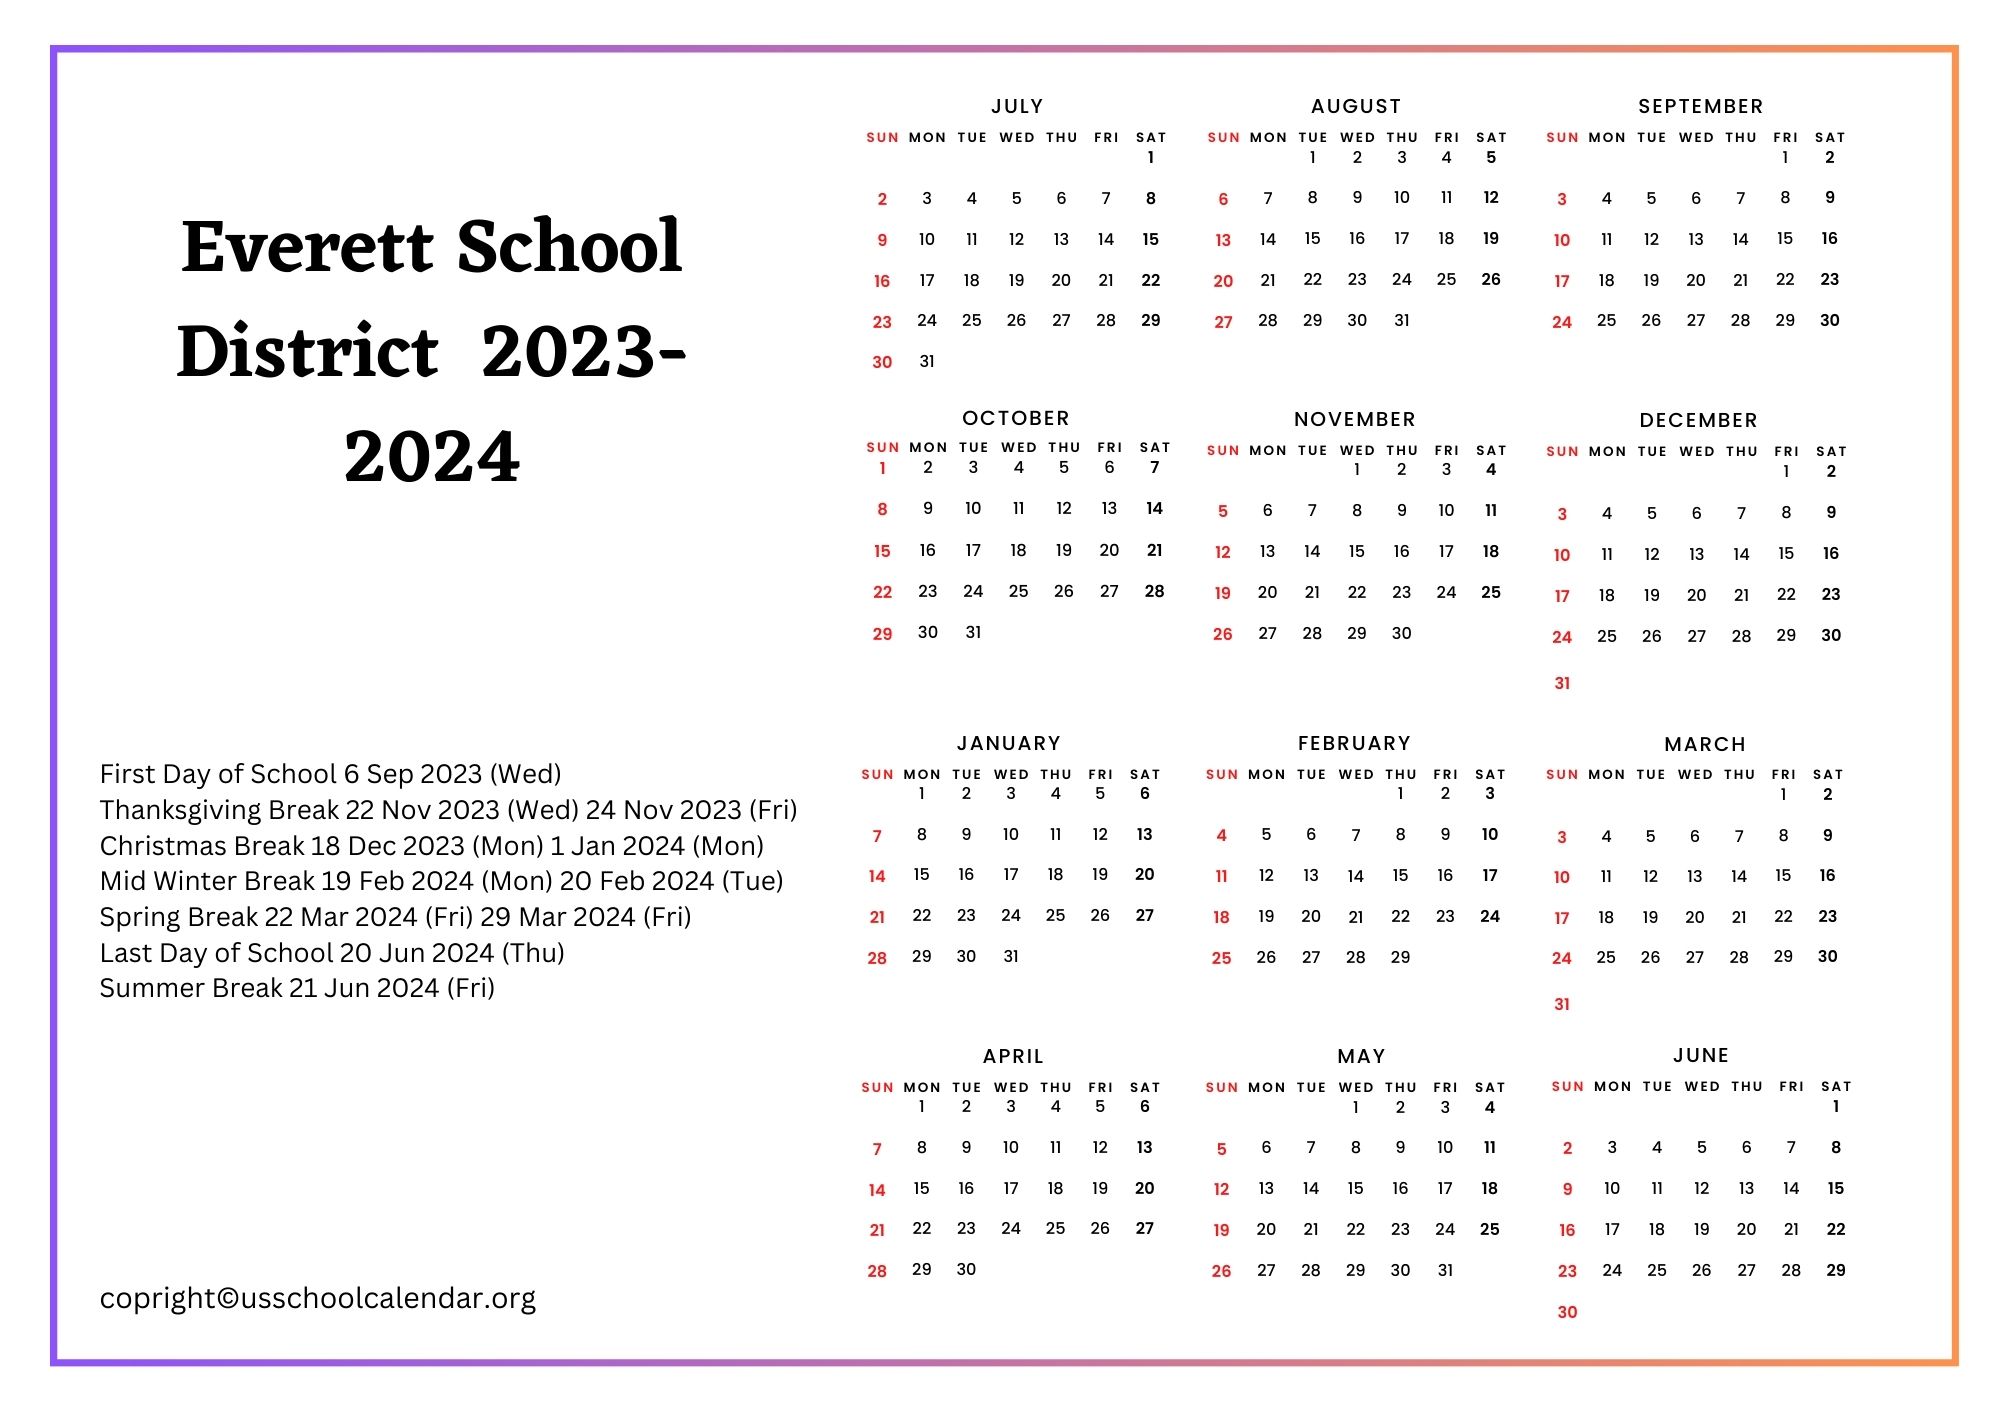 Everett School District Calendar with Holidays 2023 2024